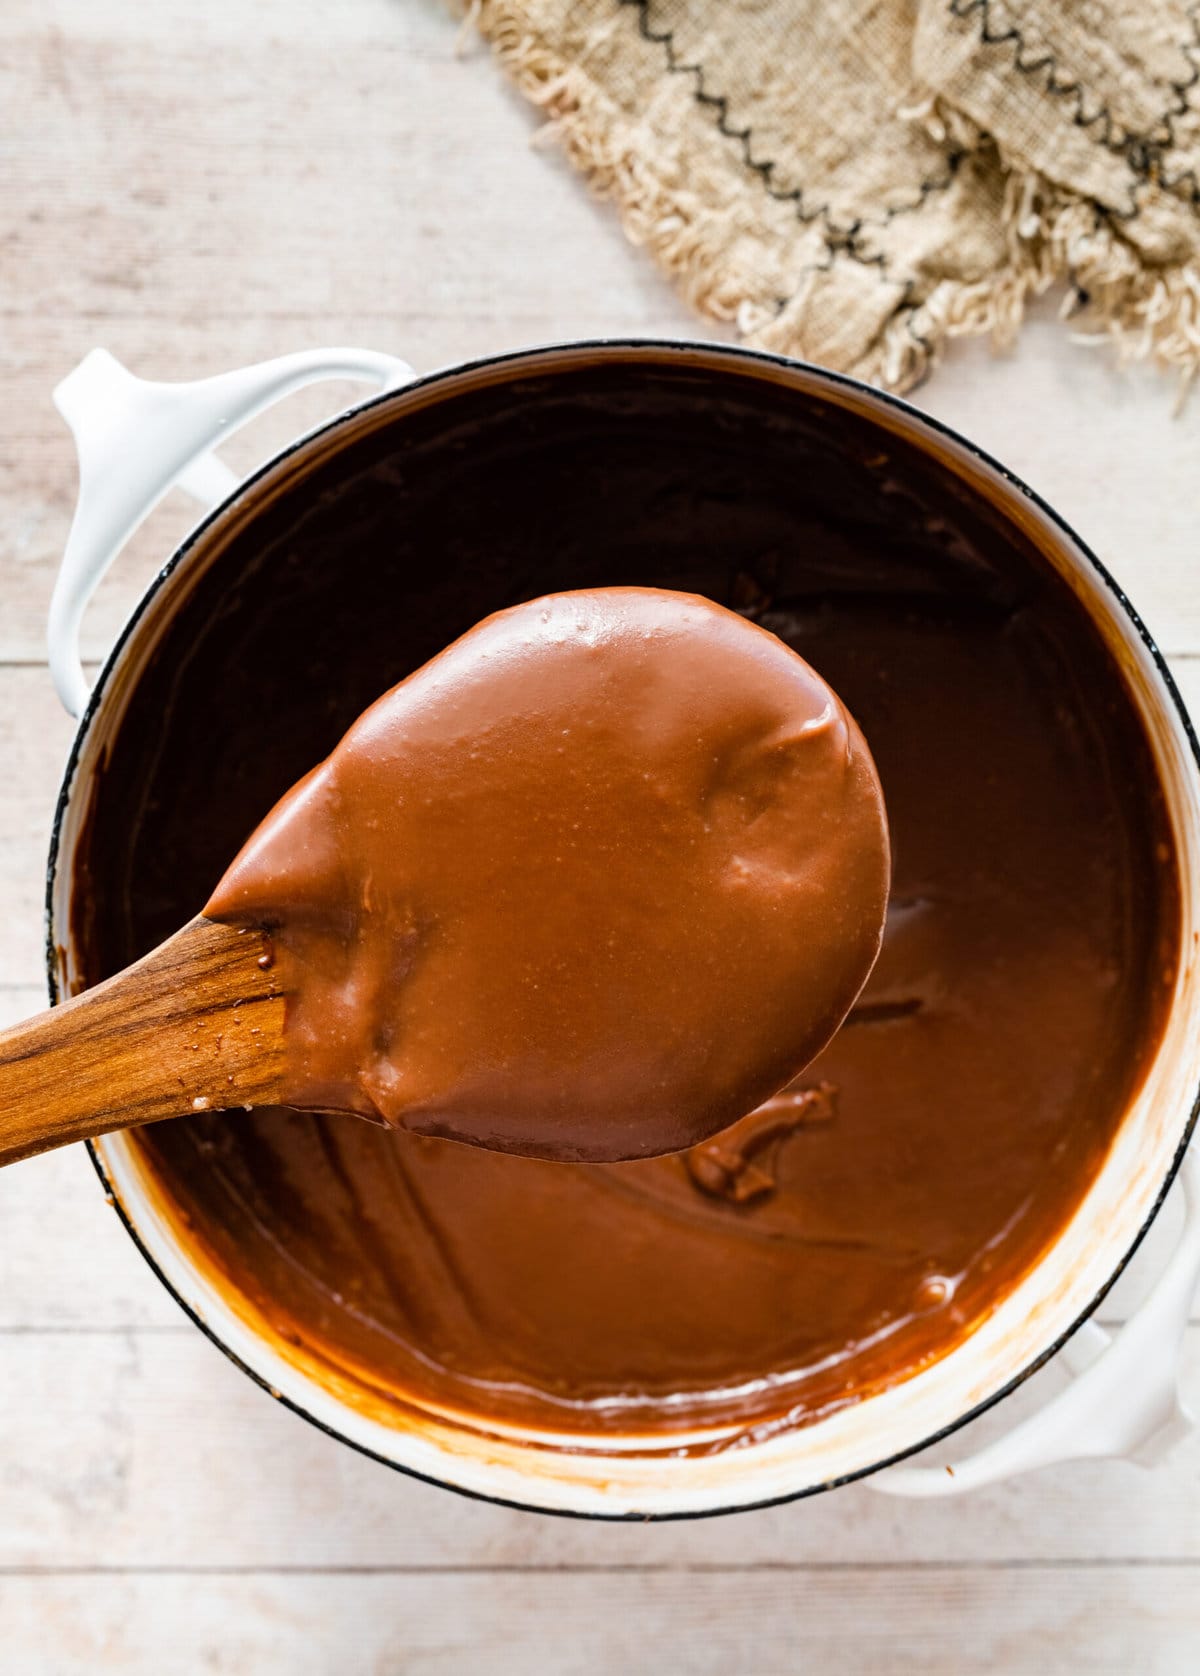 How to make homemade chocolate pudding pie step-by-step: chocolate pudding ready to put into the prepared pie shell.